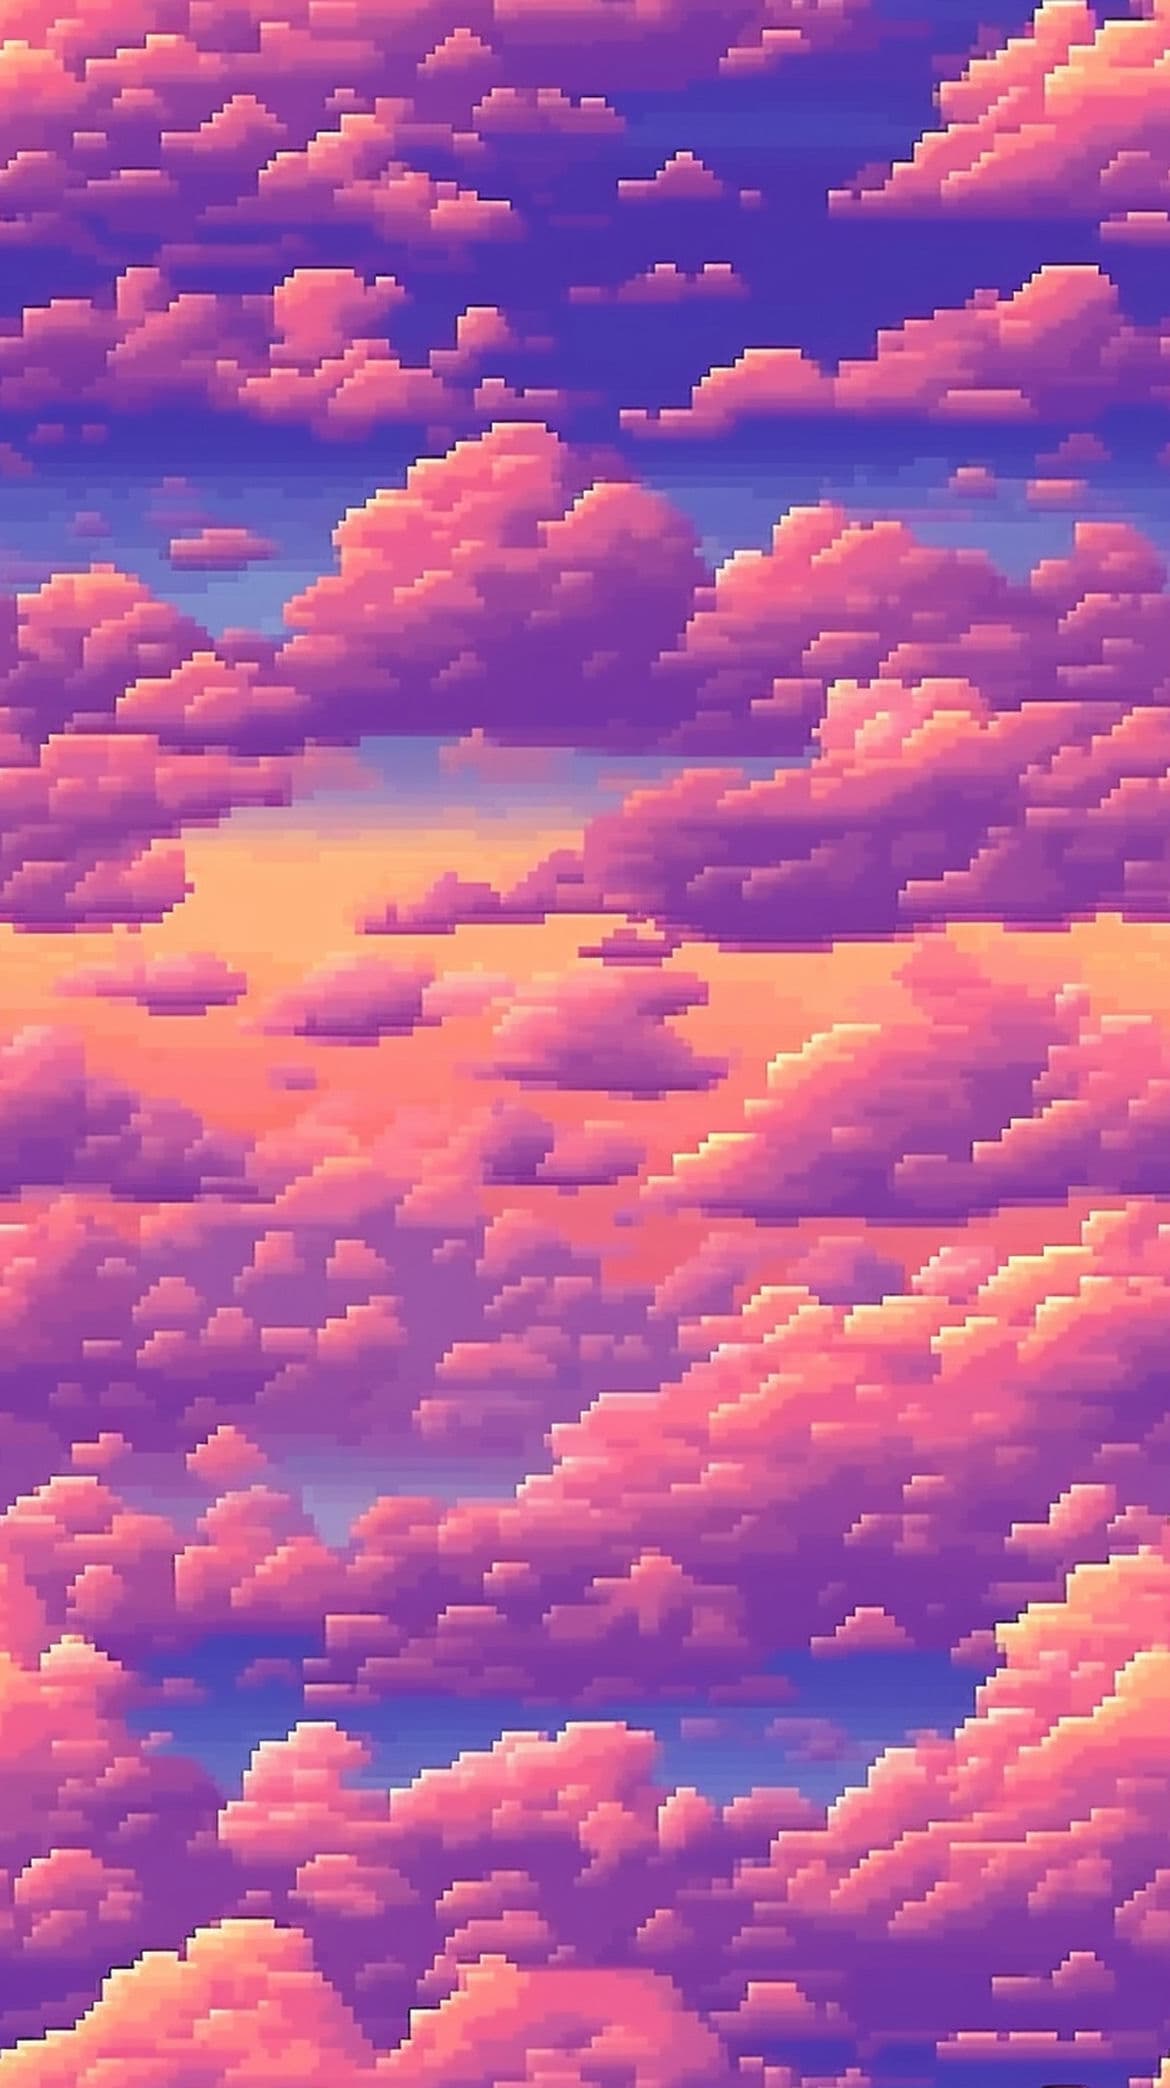 Sunset Clouds Images - Free Download on Freepik